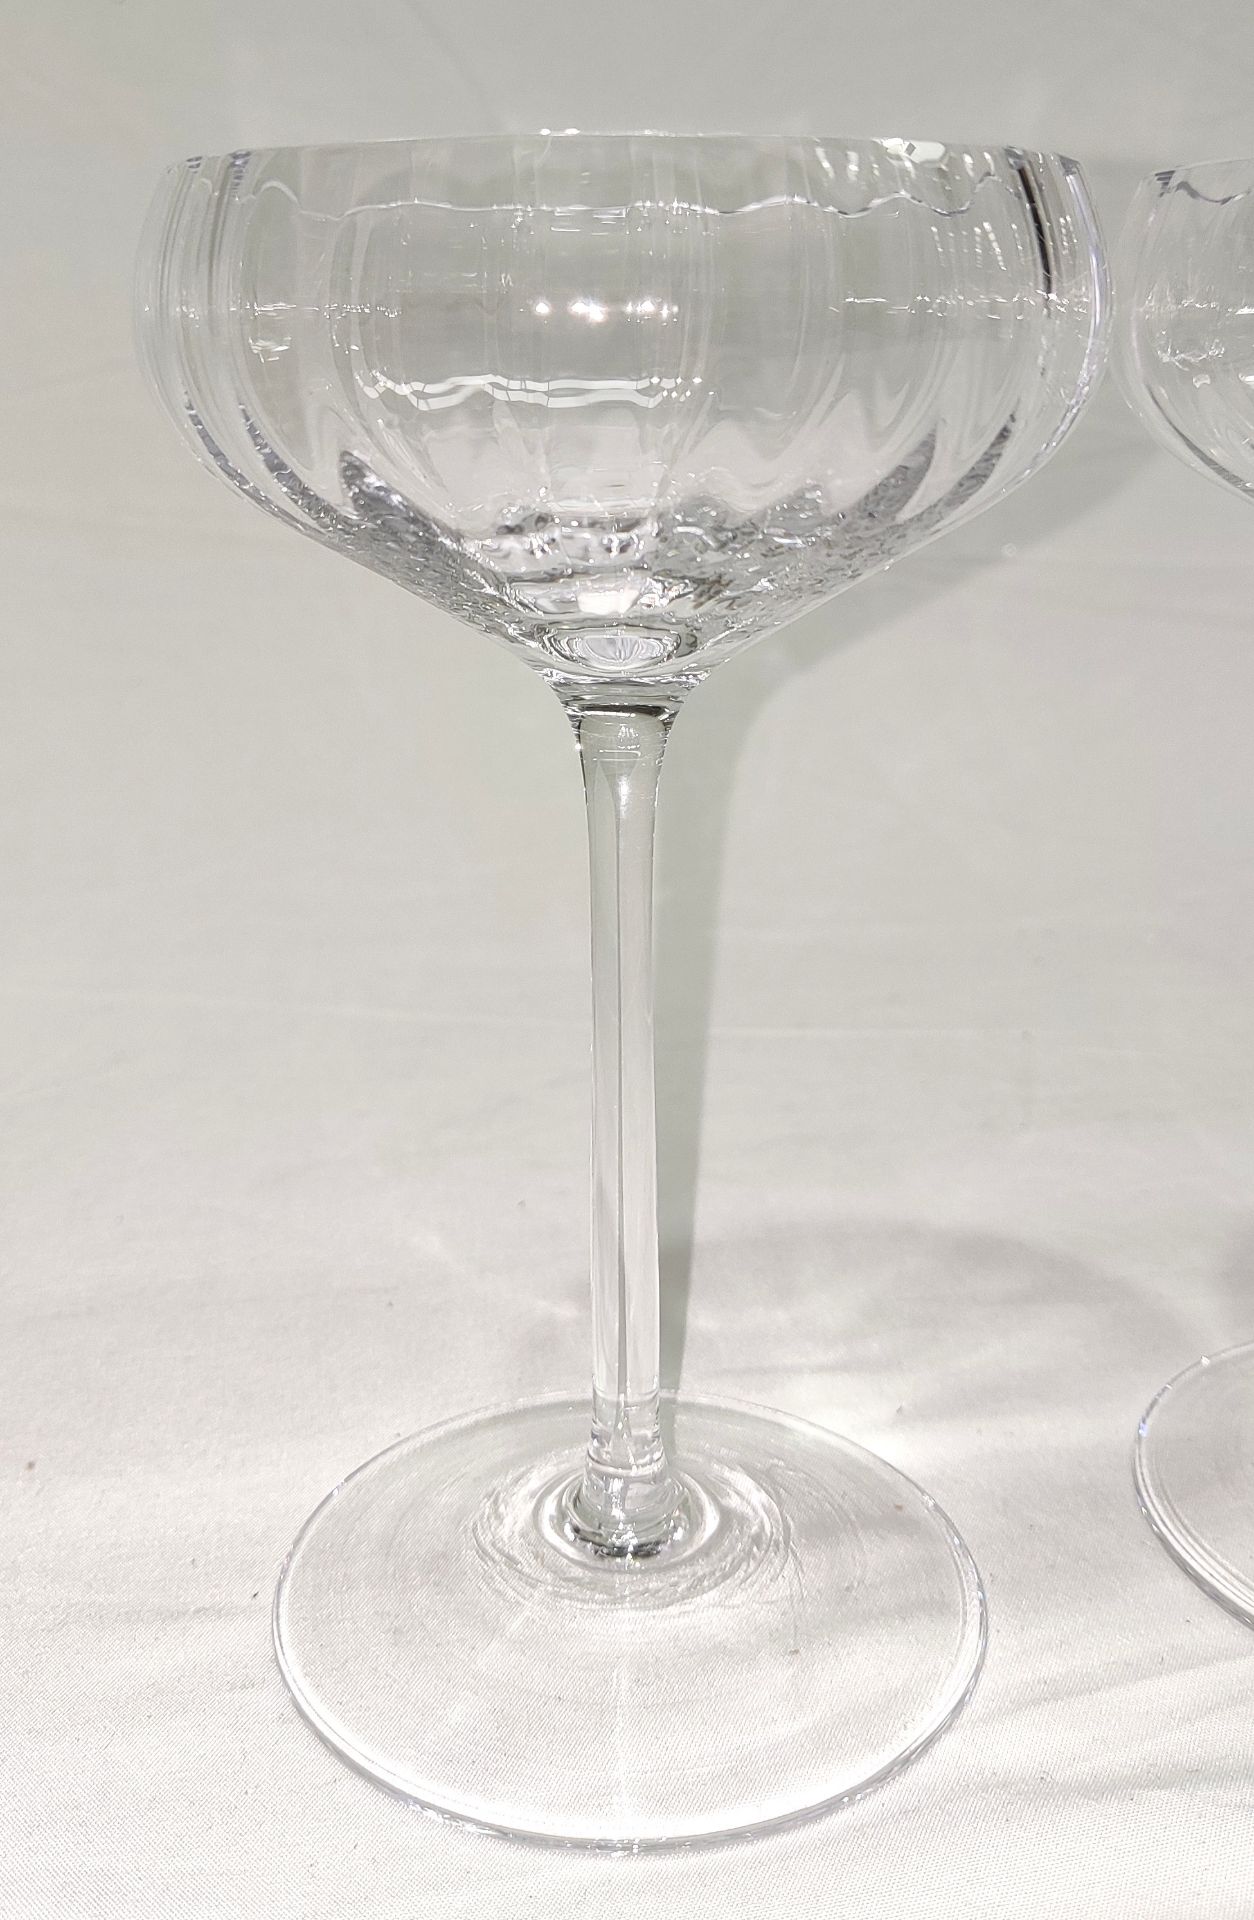 1 x SOHO HOME Pembroke Champagne Coupe - 3 Glasses - Boxed - Original RRP £72 - Ref: 6741245/ - Image 13 of 17